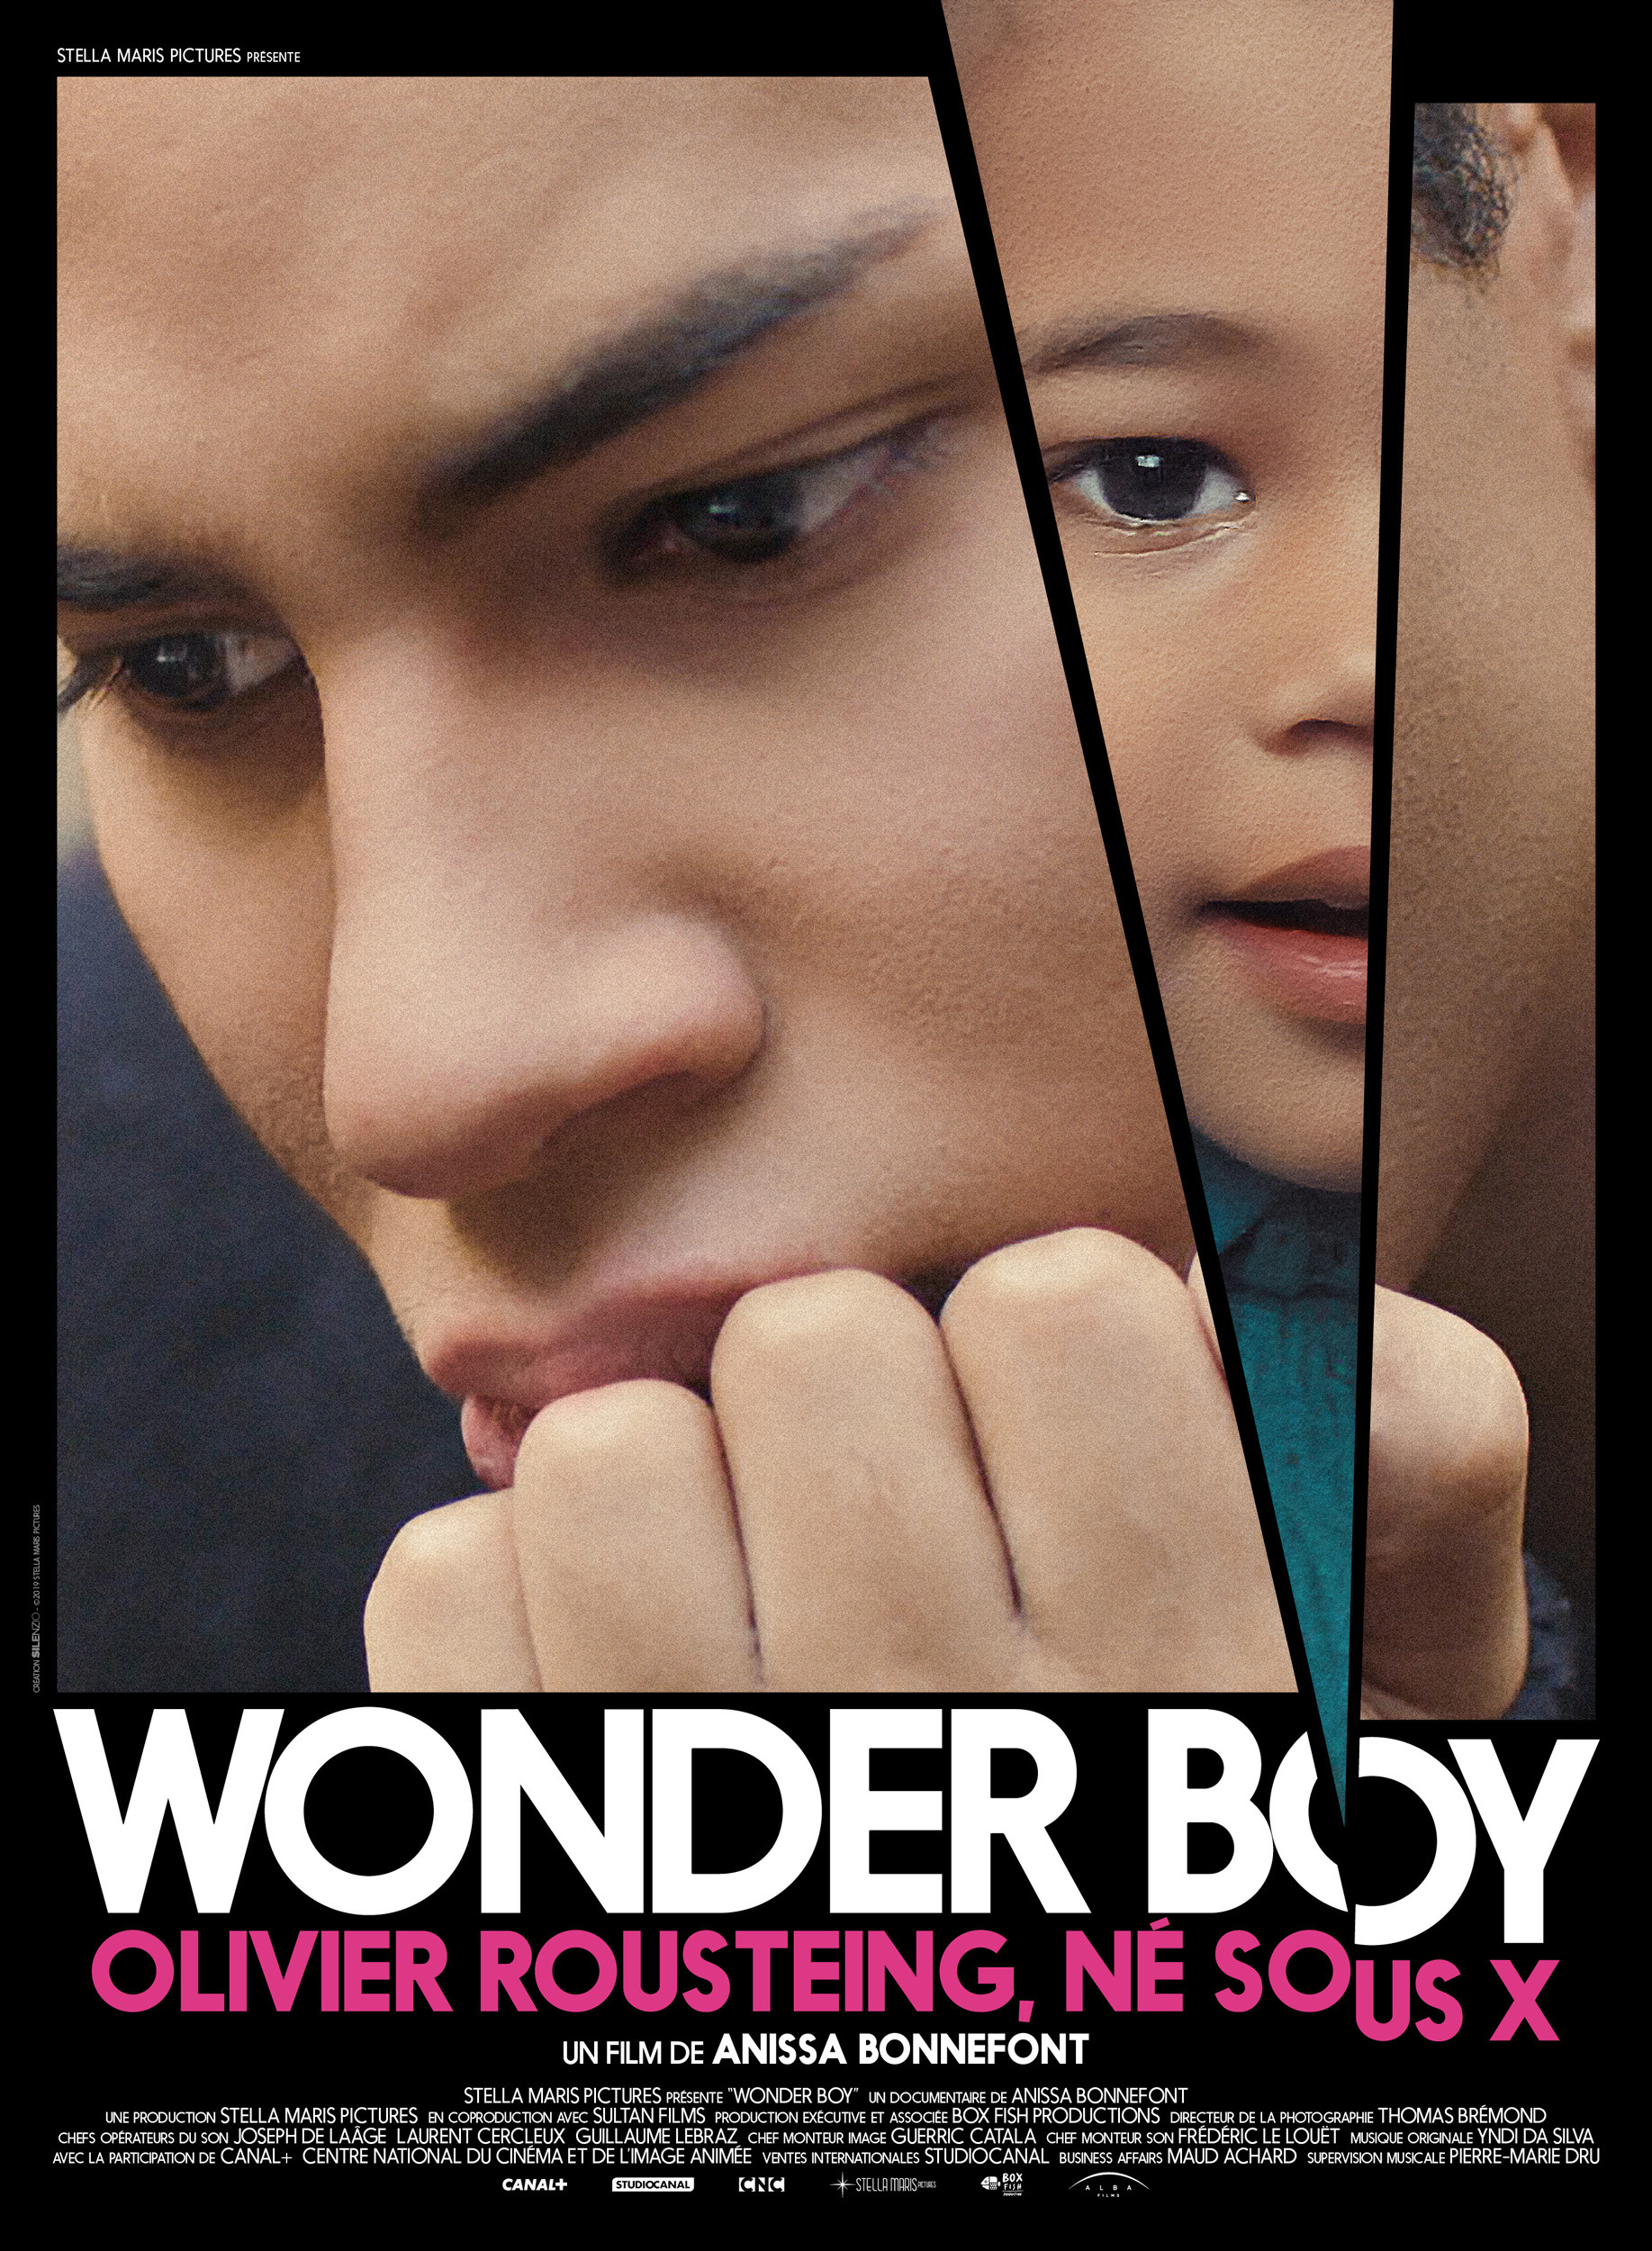 Mega Sized Movie Poster Image for Wonder Boy, Olivier Rousteing, né sous X 